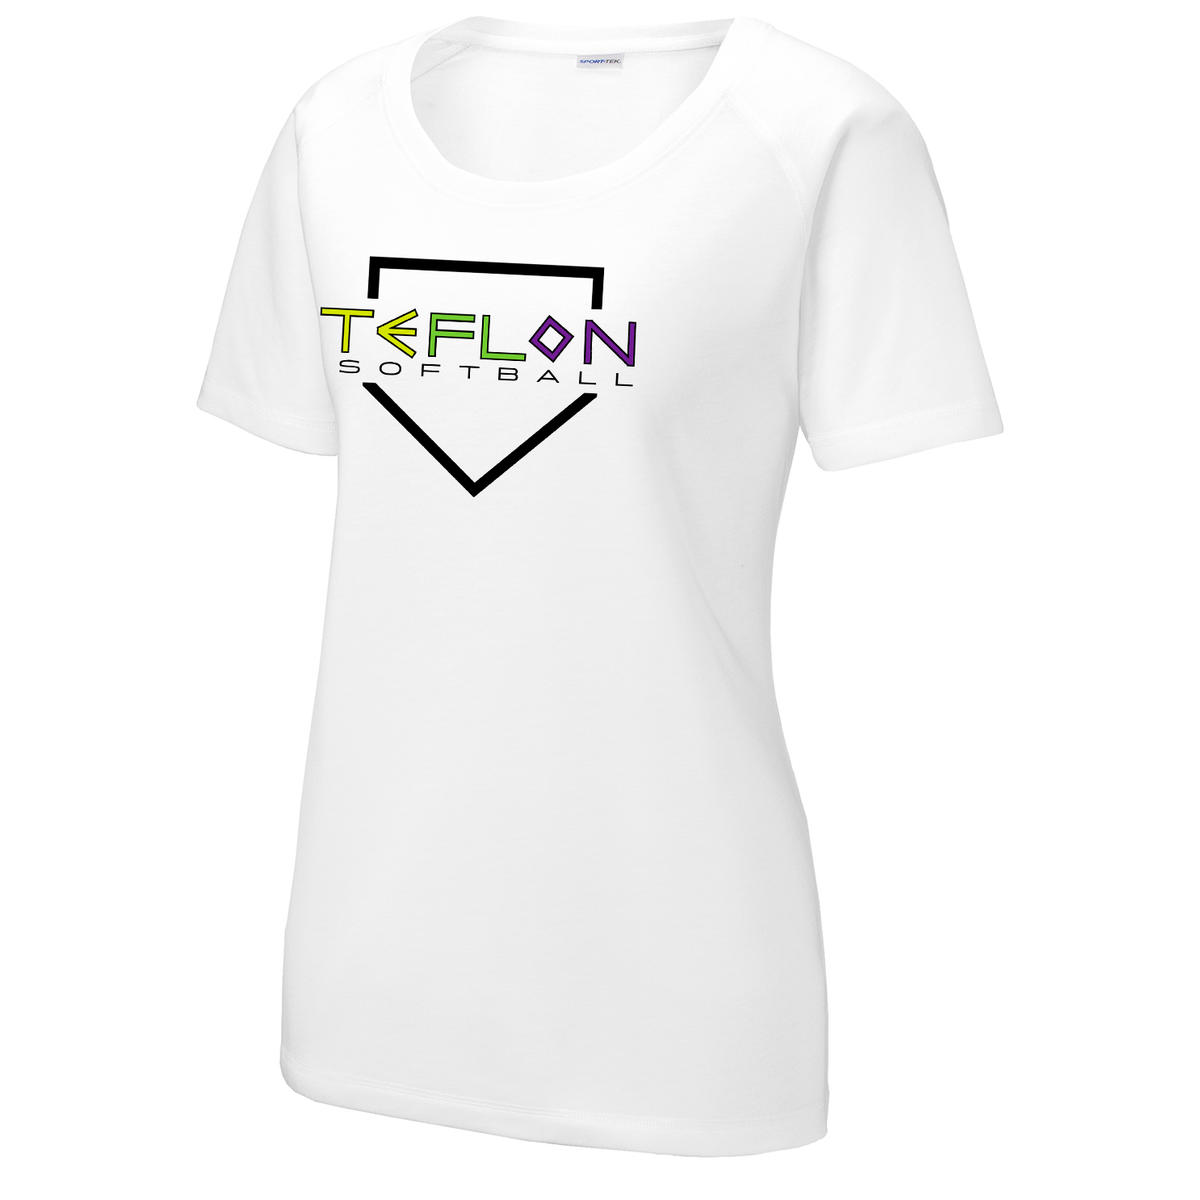 Team Teflon Softball Women's Raglan CottonTouch